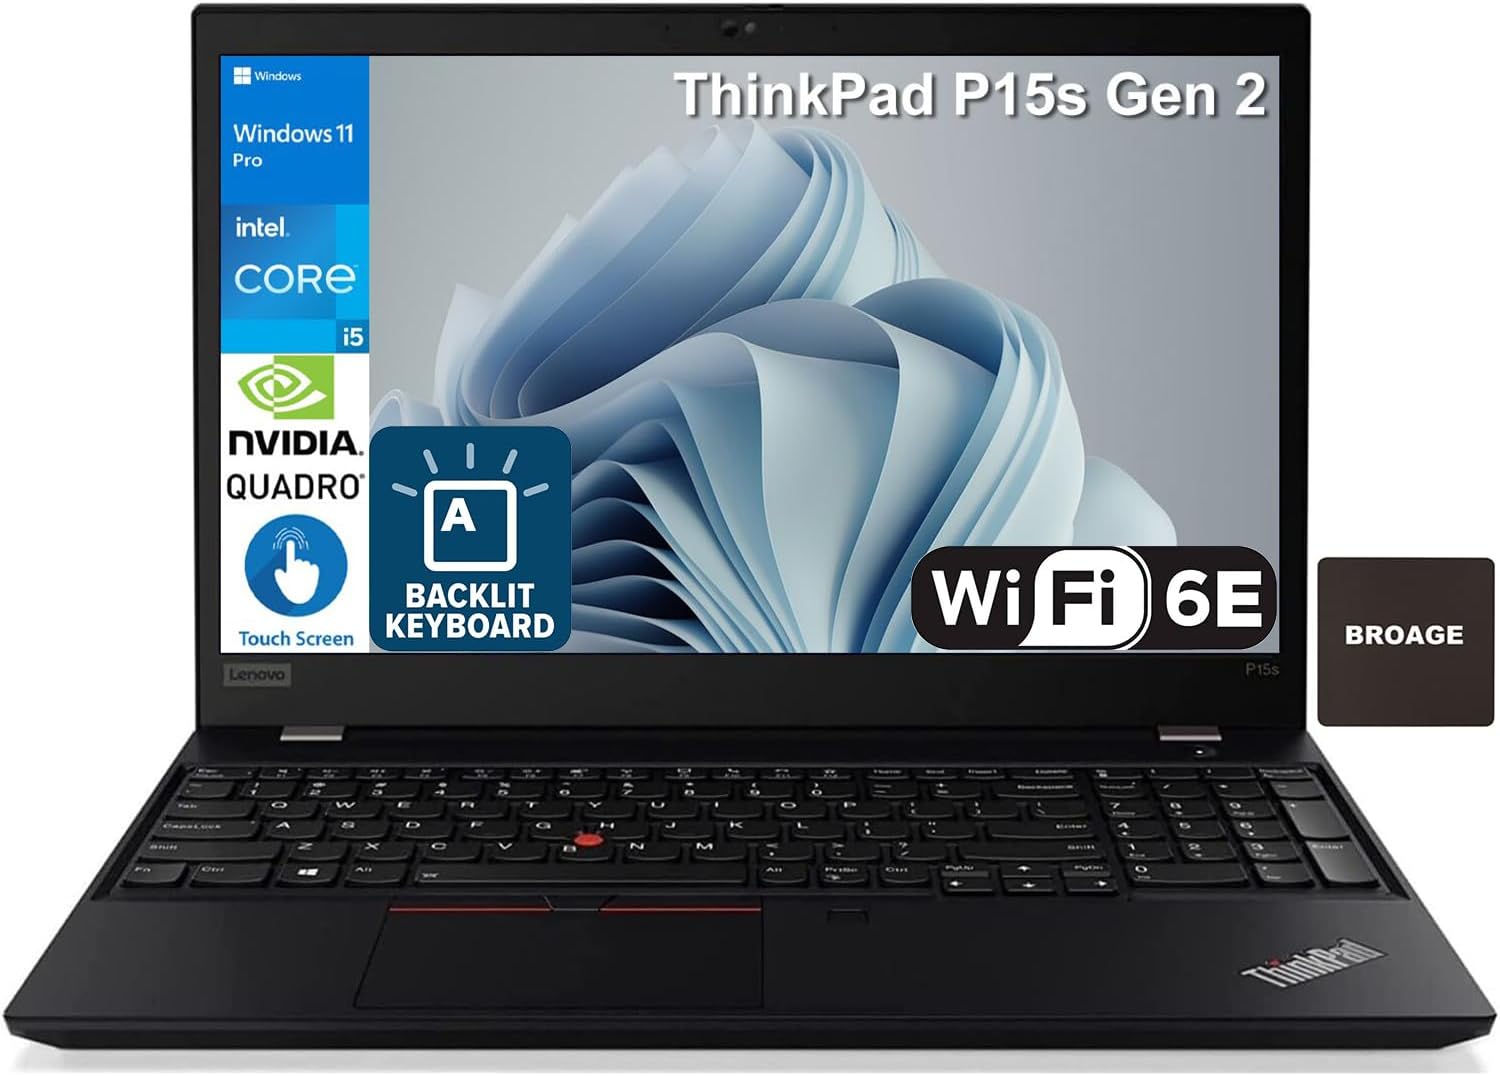 Lenovo ThinkPad P15s 15.6" Touchscreen FHD Mobile Workstation Business Laptop Computer, Intel Core i5-1145G7, Quadro T500, 40GB DDR4 RAM, 2TB PCIe SSD, WiFi 6E, Windows 11 Pro, 2 Year Warraty, BROAG